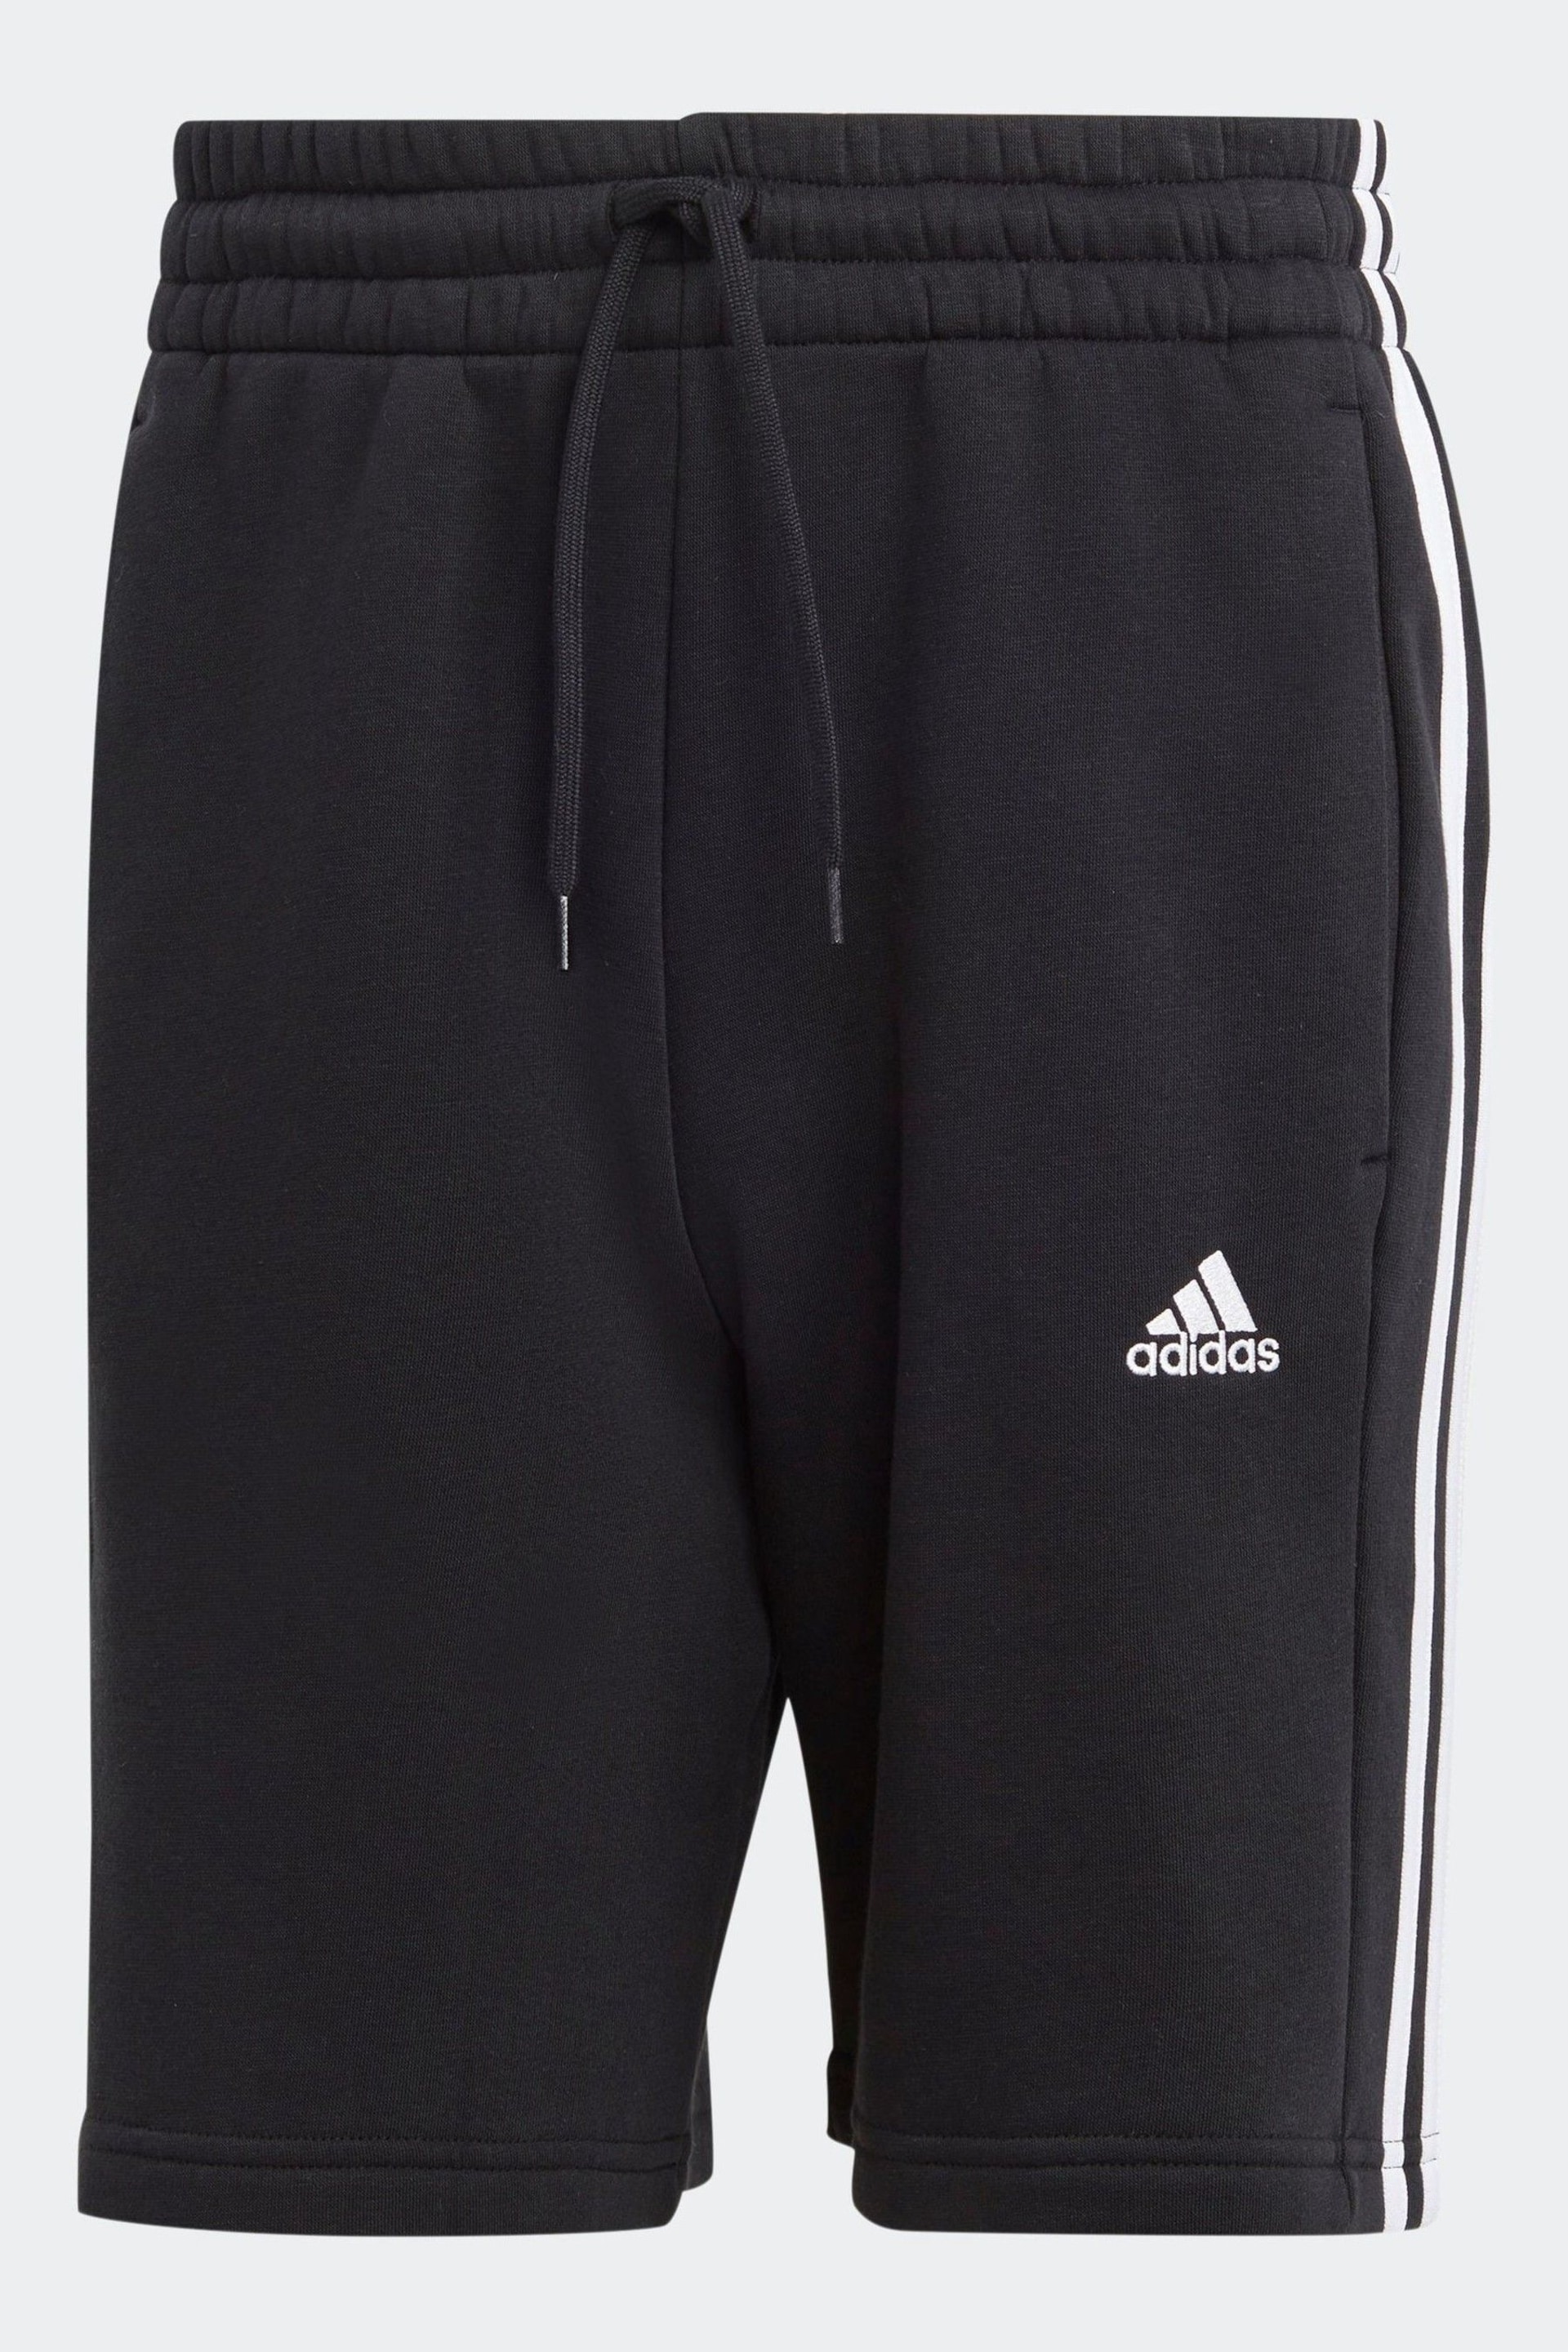 adidas Black Sportswear Essentials Fleece 3-Stripes Shorts - Image 6 of 6